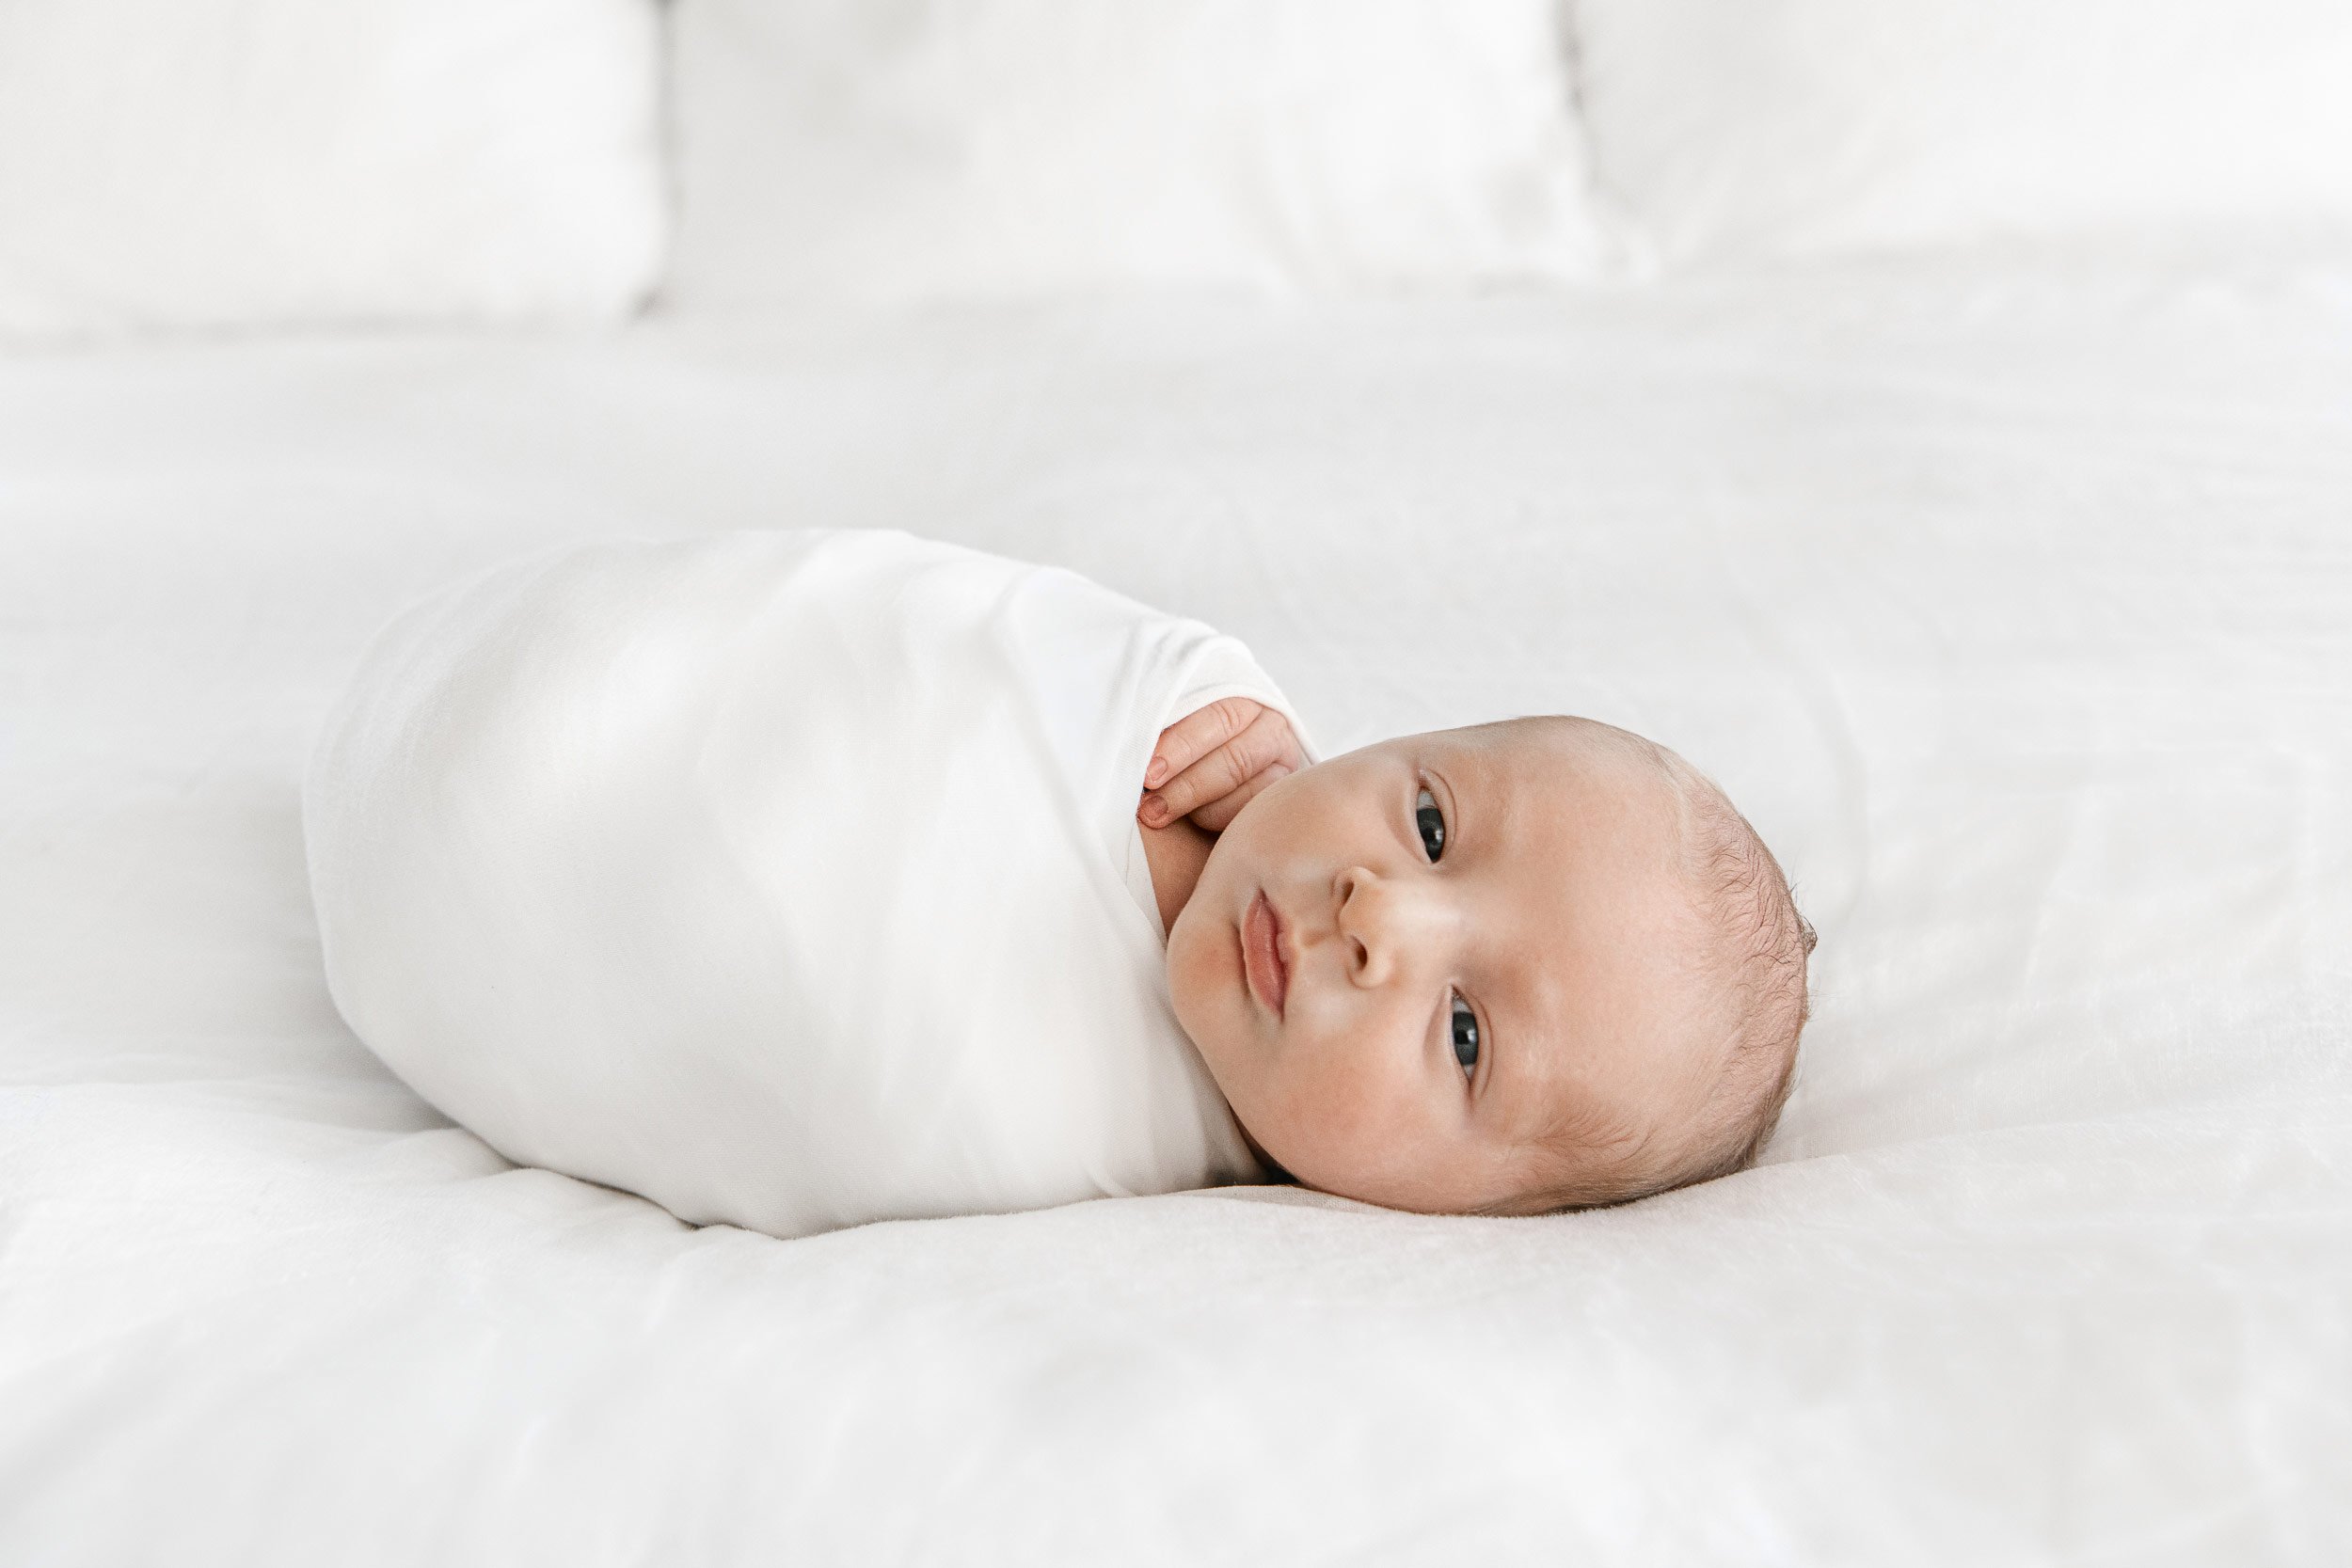  Nicole Hawkins Photography an NJ newborn Photographer captures a baby on a bed in a white swaddle. in home newborn pics #NicoleHawkinsPhotography #InHomeNewborn #JerseyShoreNewborn #MontclairPhotographers #NewbornPhotography #baby #newborn 